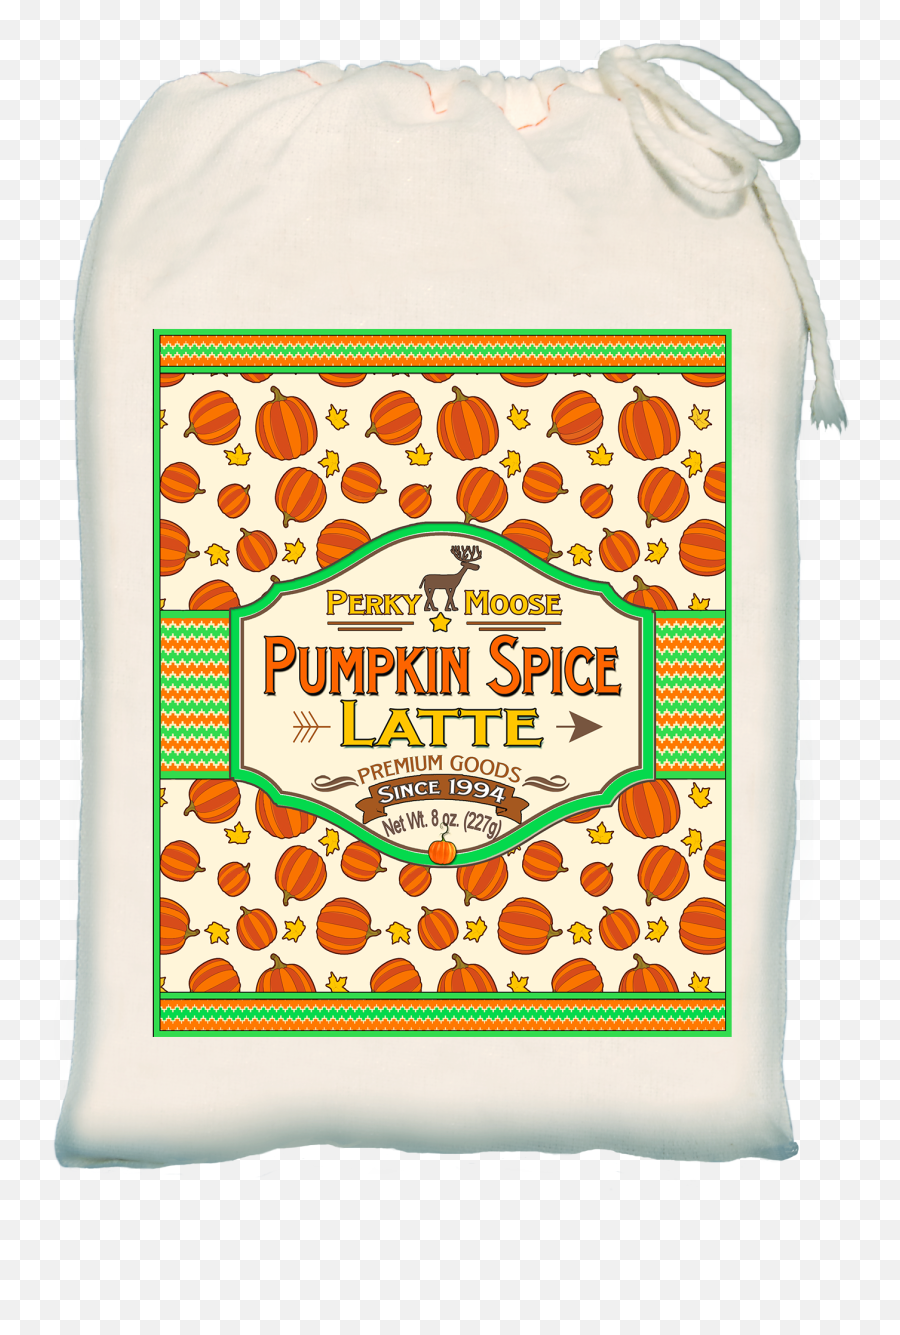 Pumpkin Spice Latte Perky Moose Png